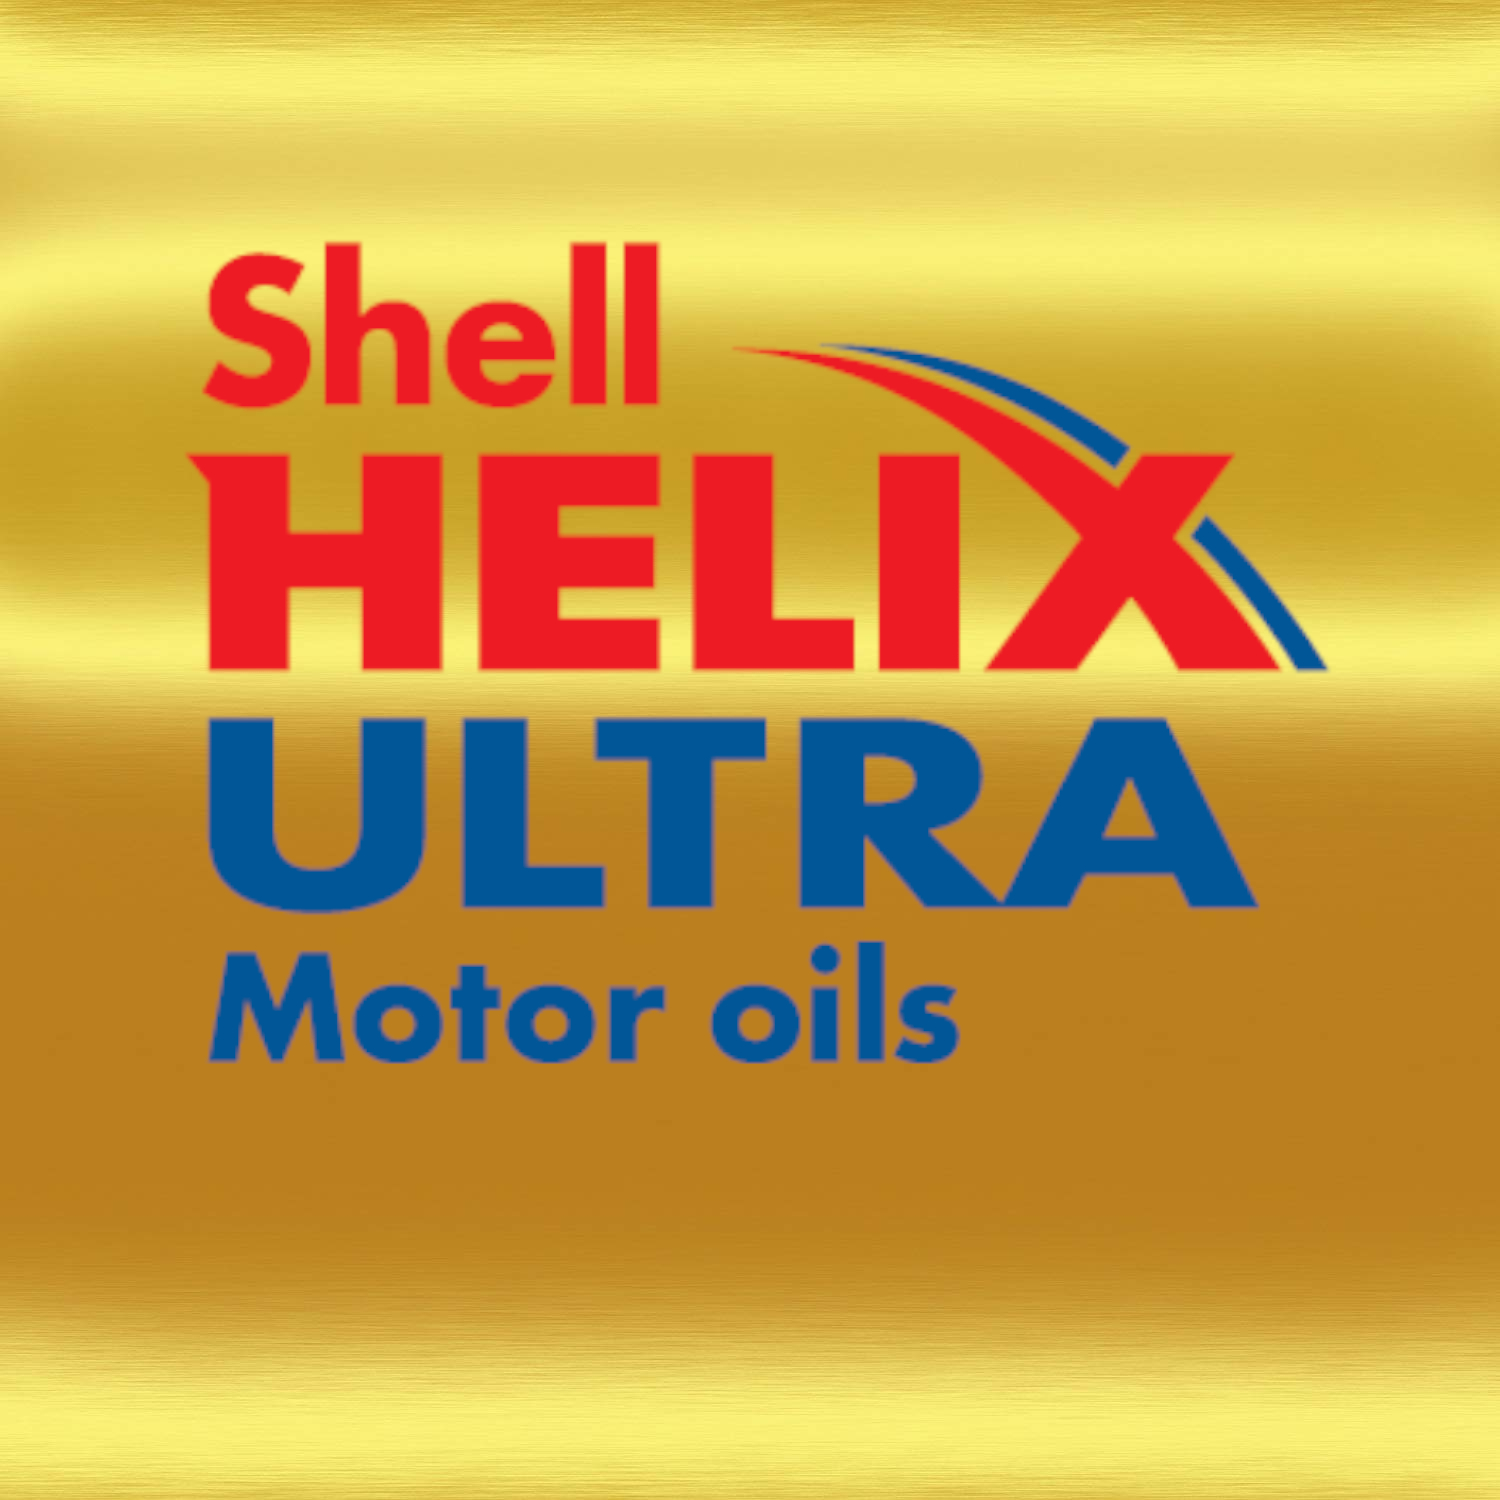 Shell Helix logo.jpg